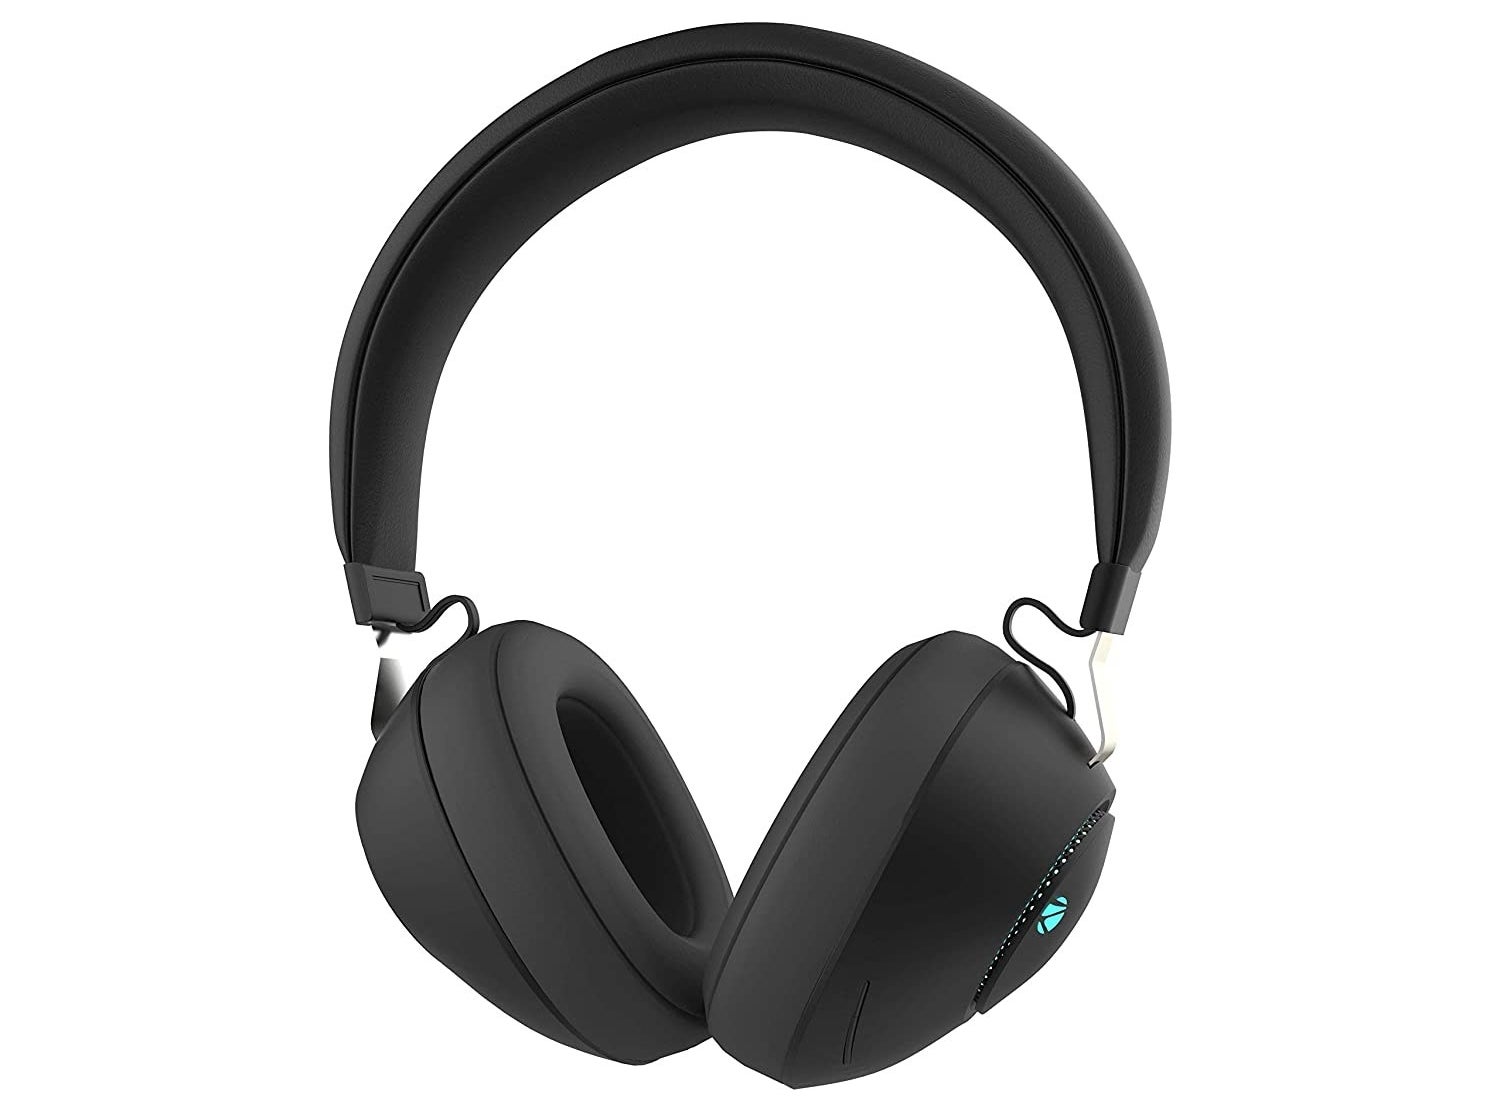 Zebronics Zeb-Duke Bluetooth Headphones in black.